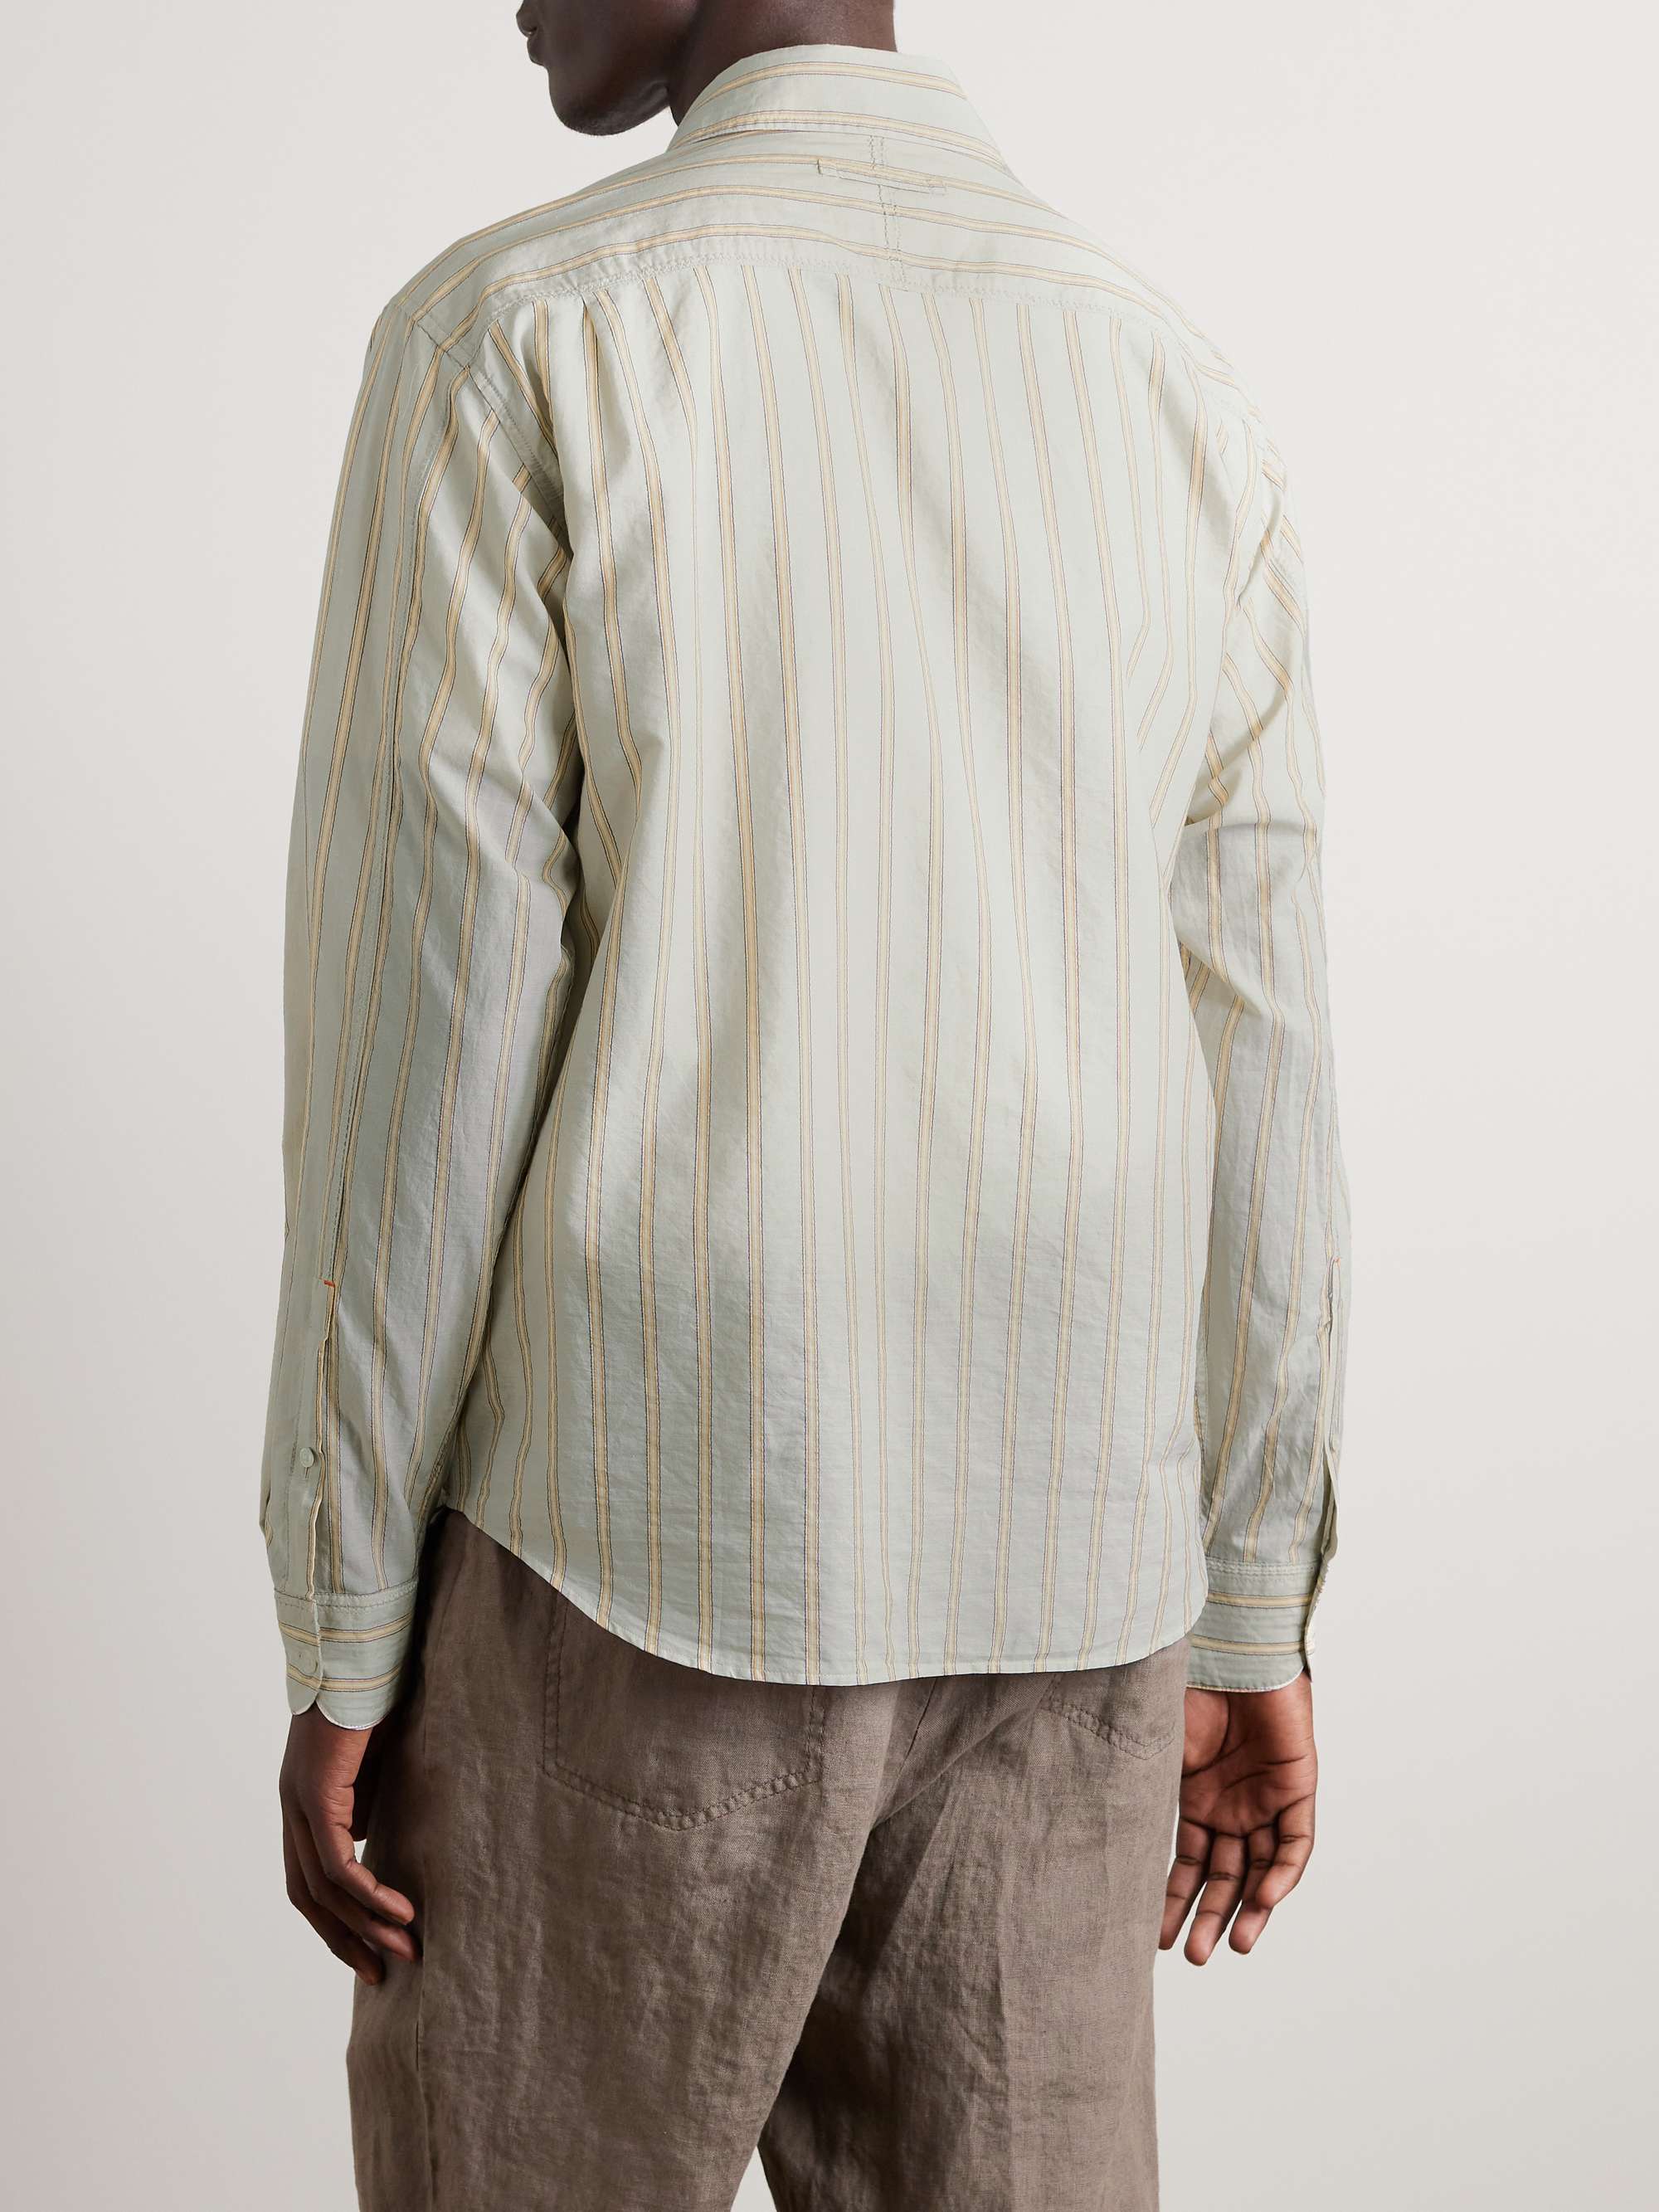 ORLEBAR BROWN Grassmore Striped Cotton Shirt